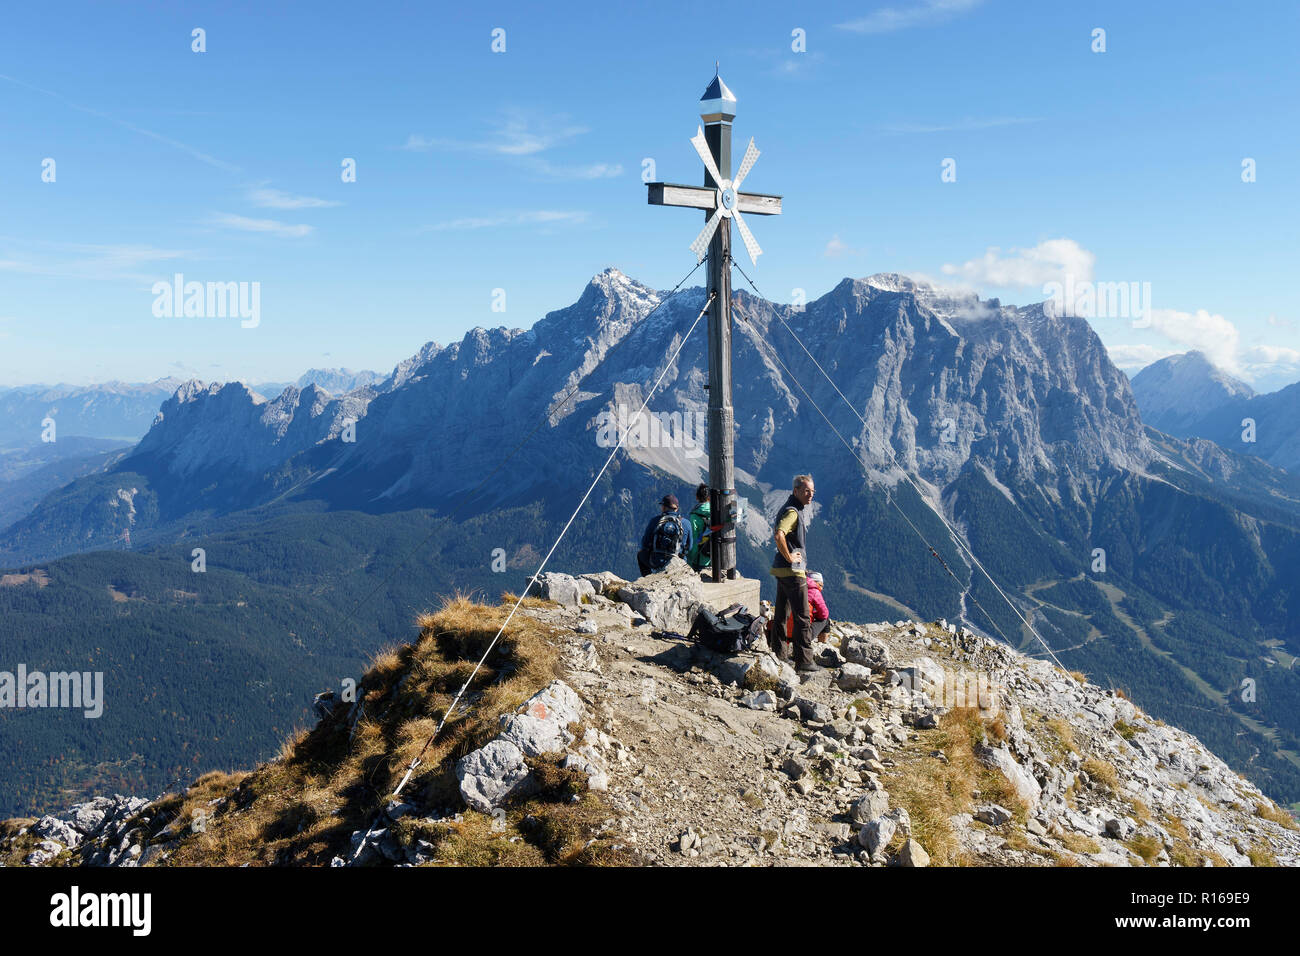 Summit of Daniel in front of Zugspitze, Ammergauer Alps, Lermoos, Tyrol, Austria Stock Photo